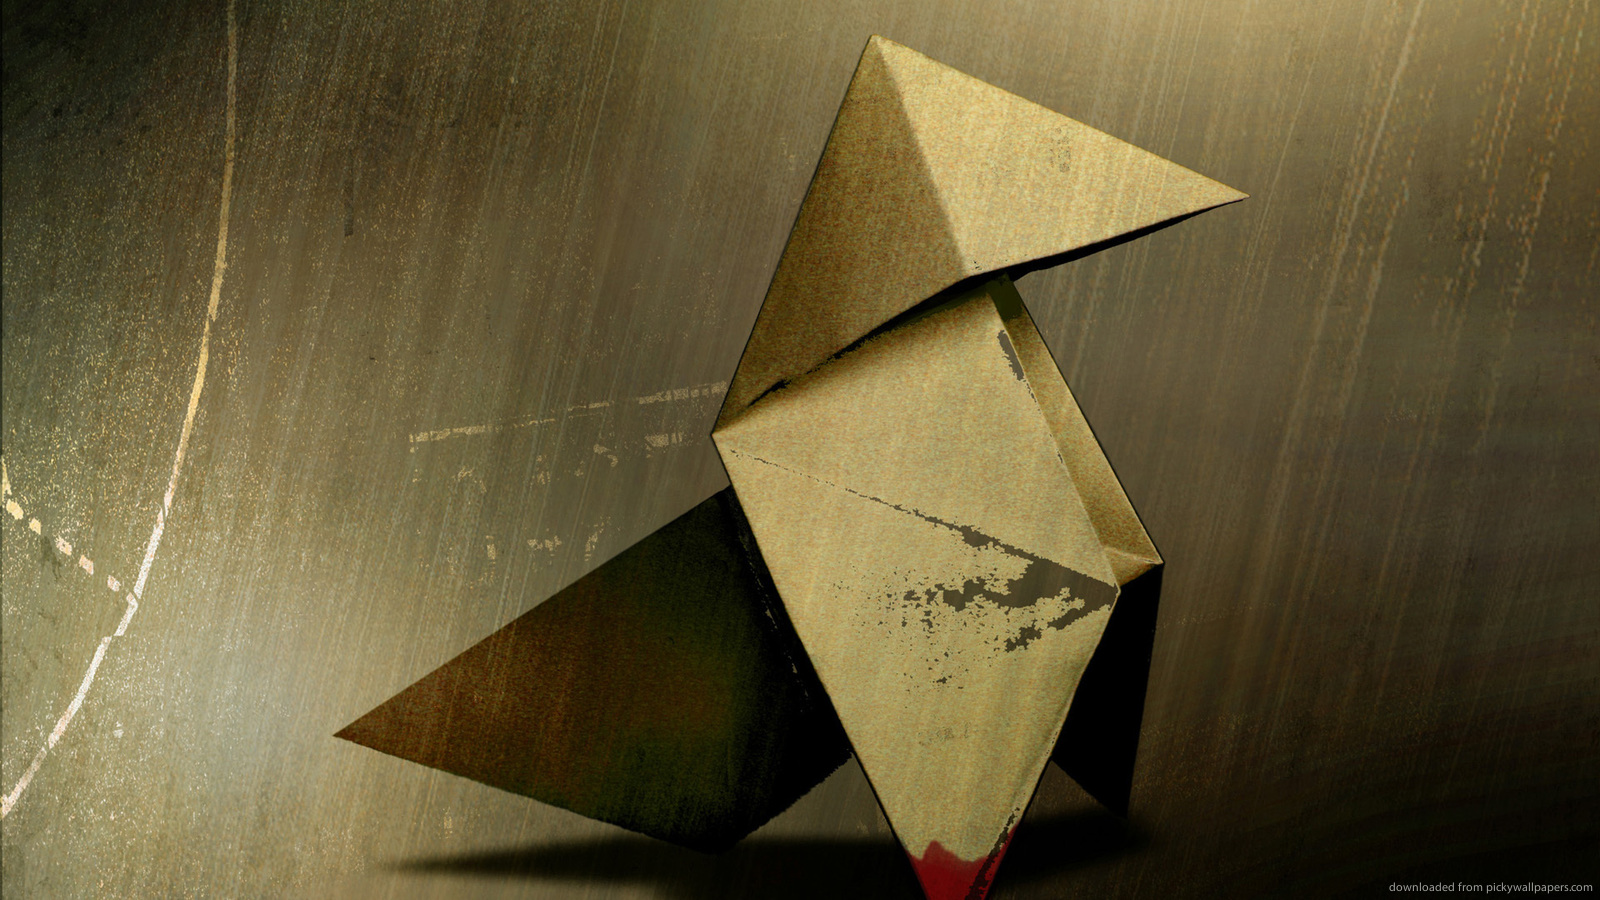 Download 1600x900 Heavy Rain Origami Figure Wallpaper